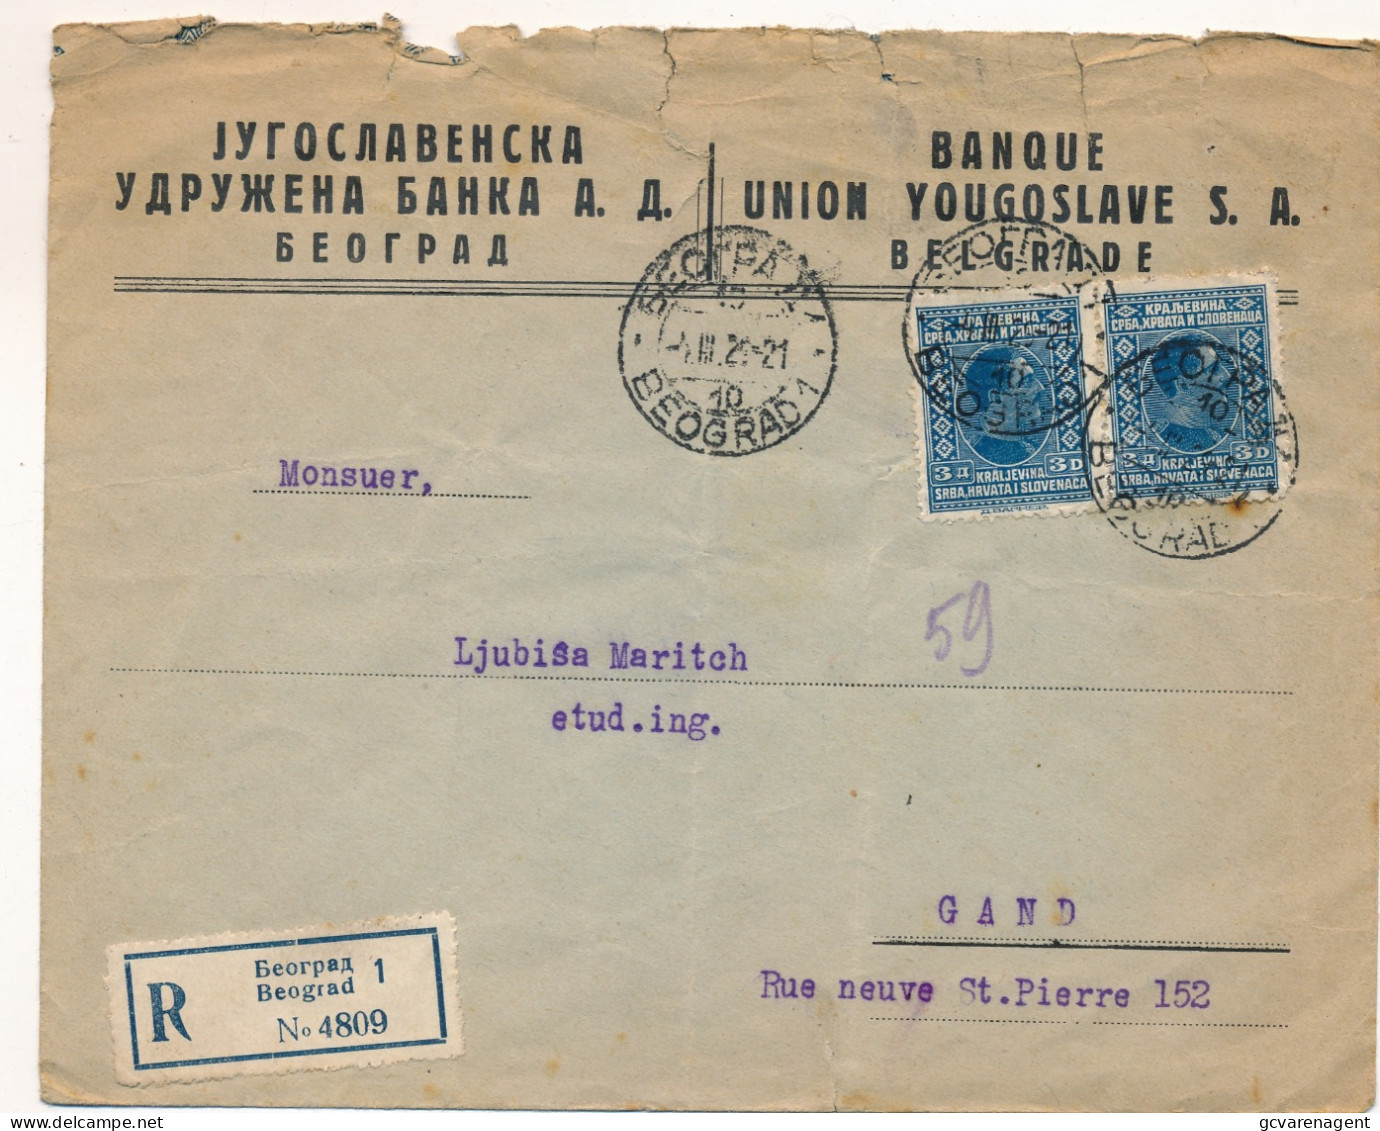 ENVELOPPE 1925 RECOMMANDE BEOGRAD - GAND   BANQUE UNION YOUGOSLAVE S.1. BELGRADE   2 SCANS - Covers & Documents